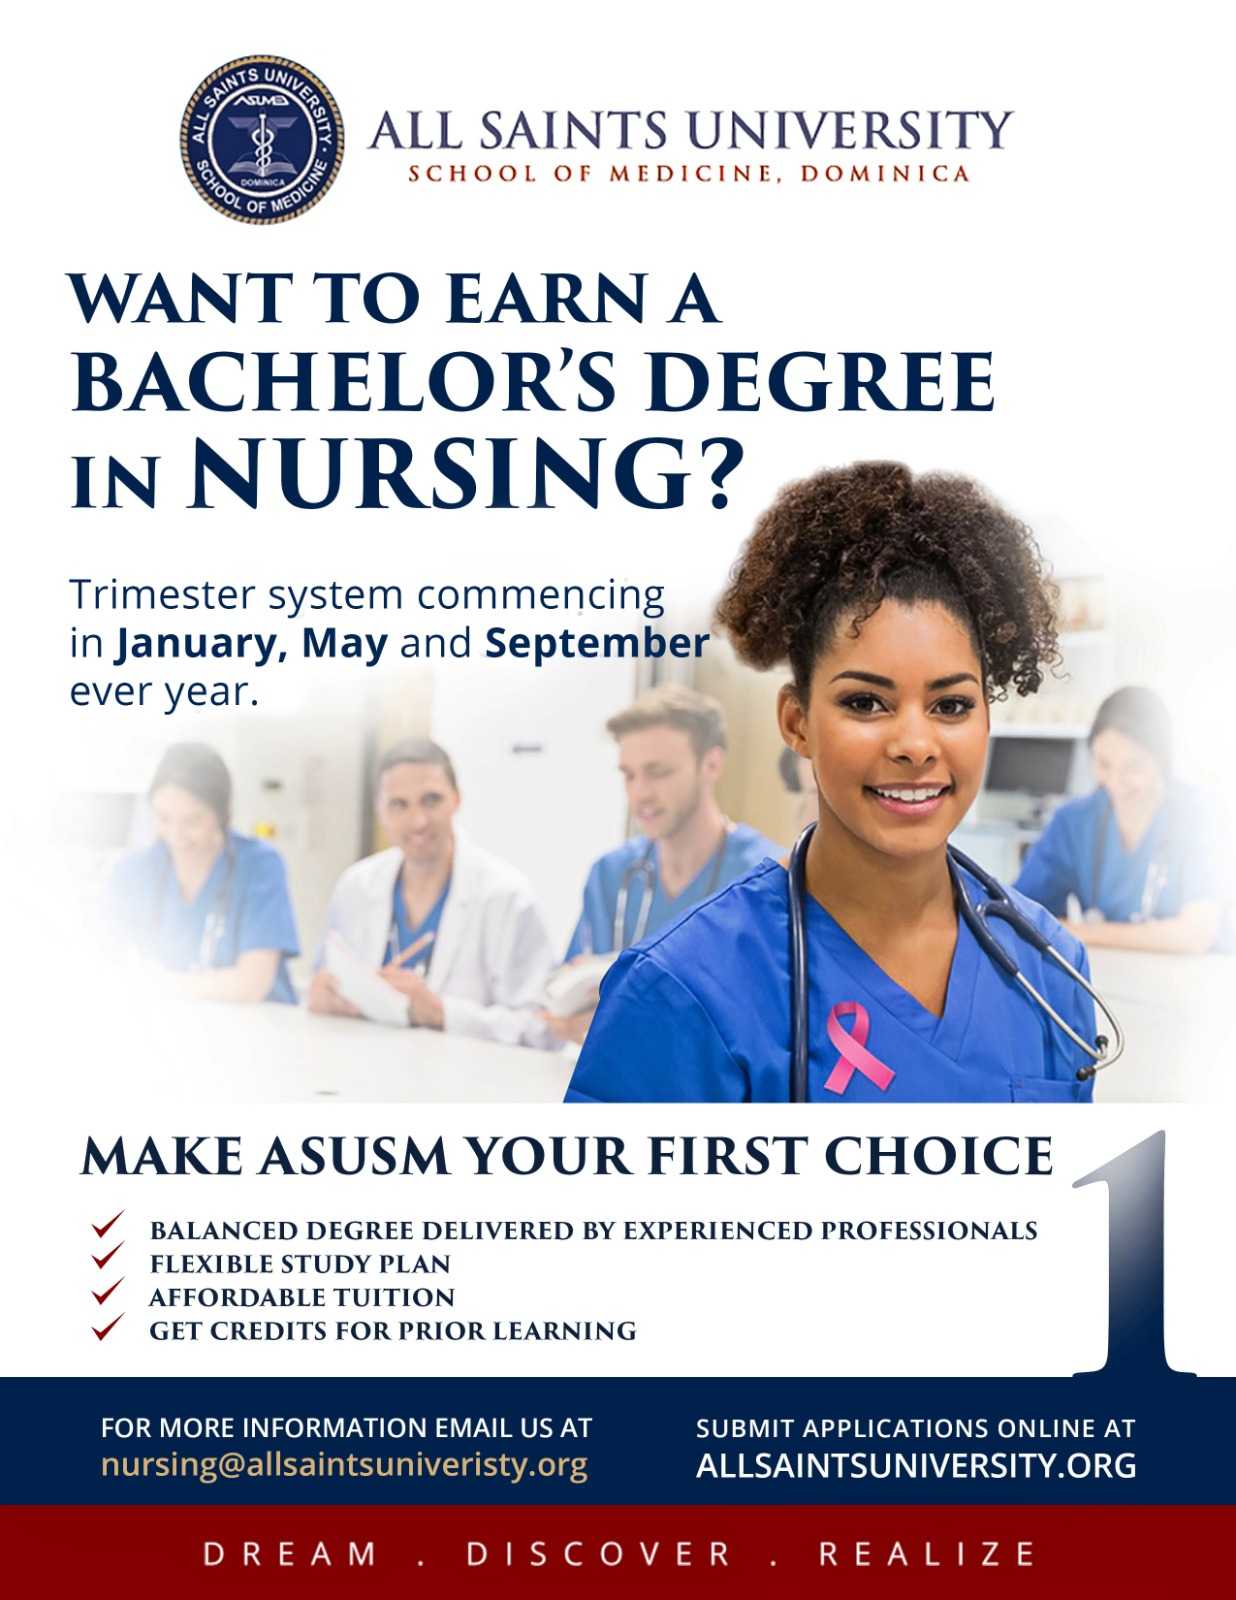 Registration for Bachelor #39 s Degree in Nursing opens at All Saints